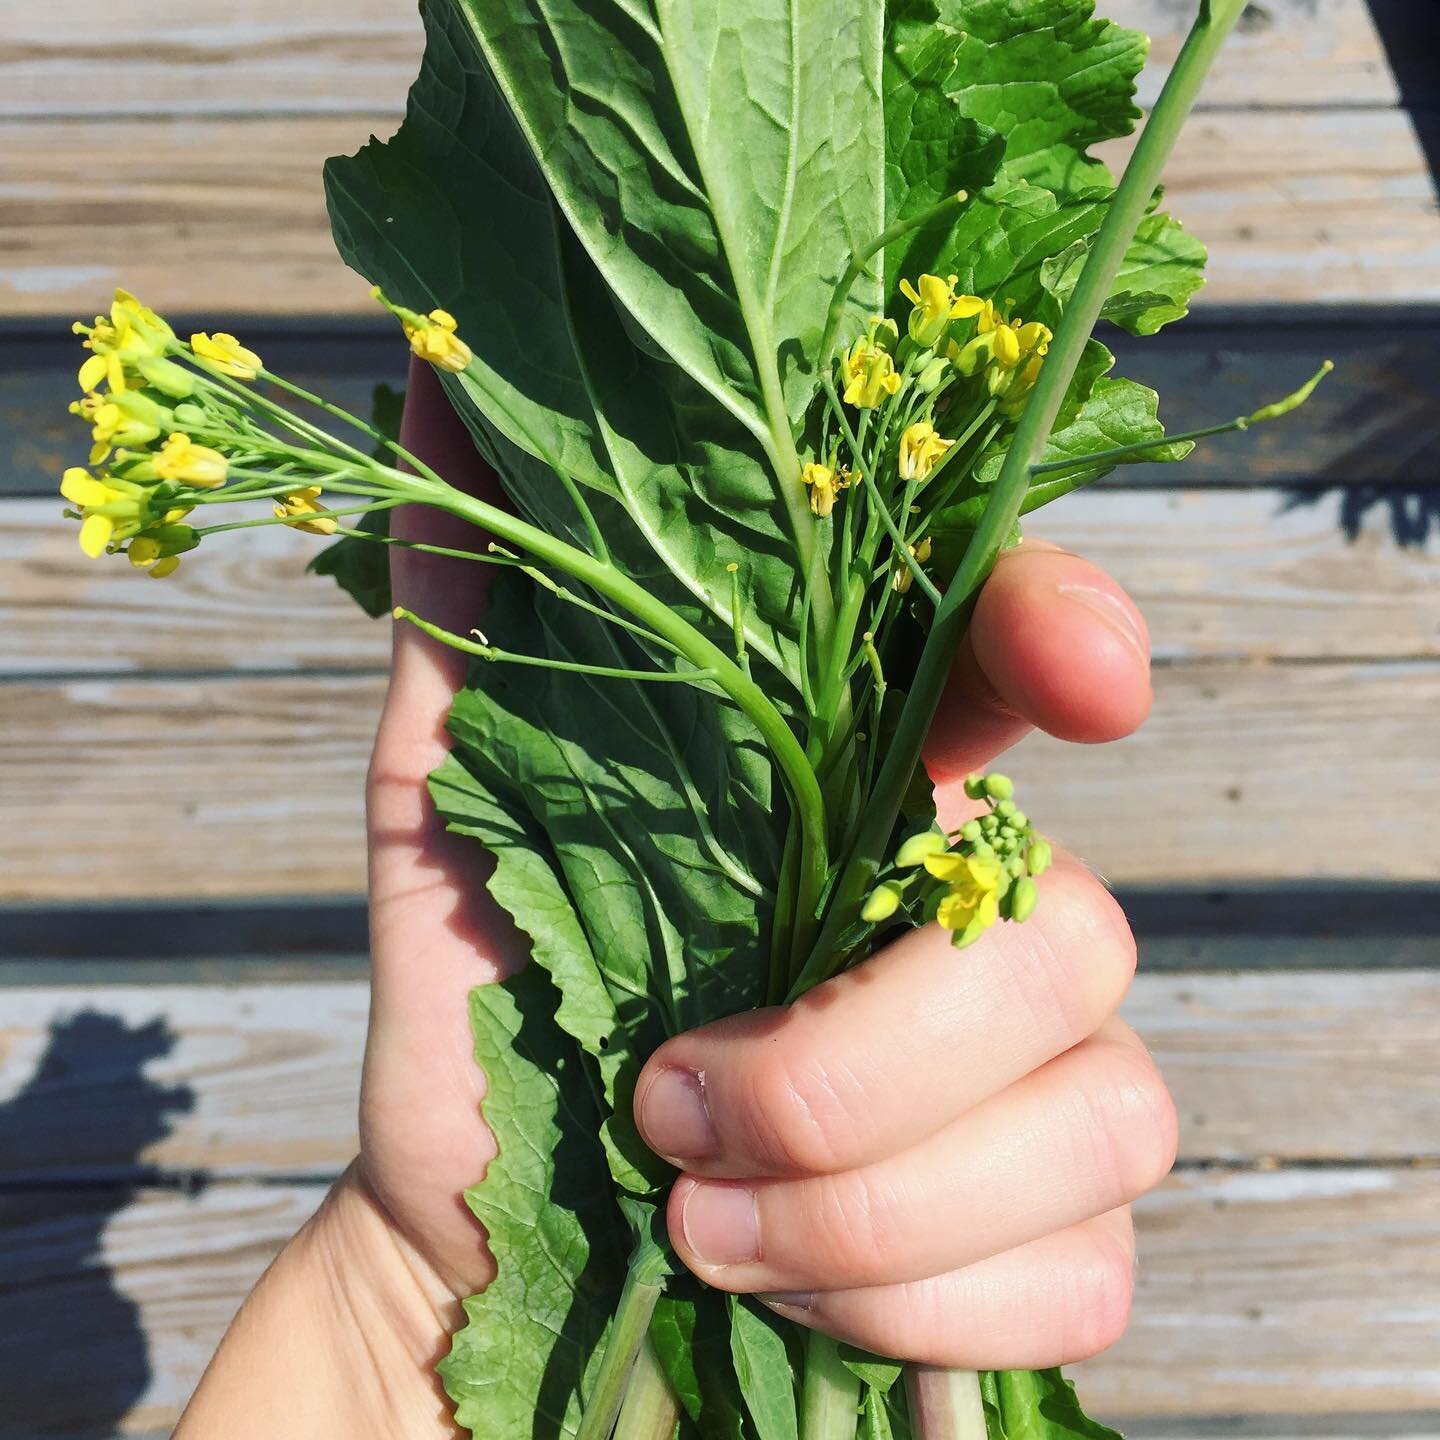 Choy looks like broccoli when bolting; tasty yellow flowers! 🌻
#growfood #gardening #choy #choi #edibleplants #growfoodnotlawns #vegangardener #eatplants